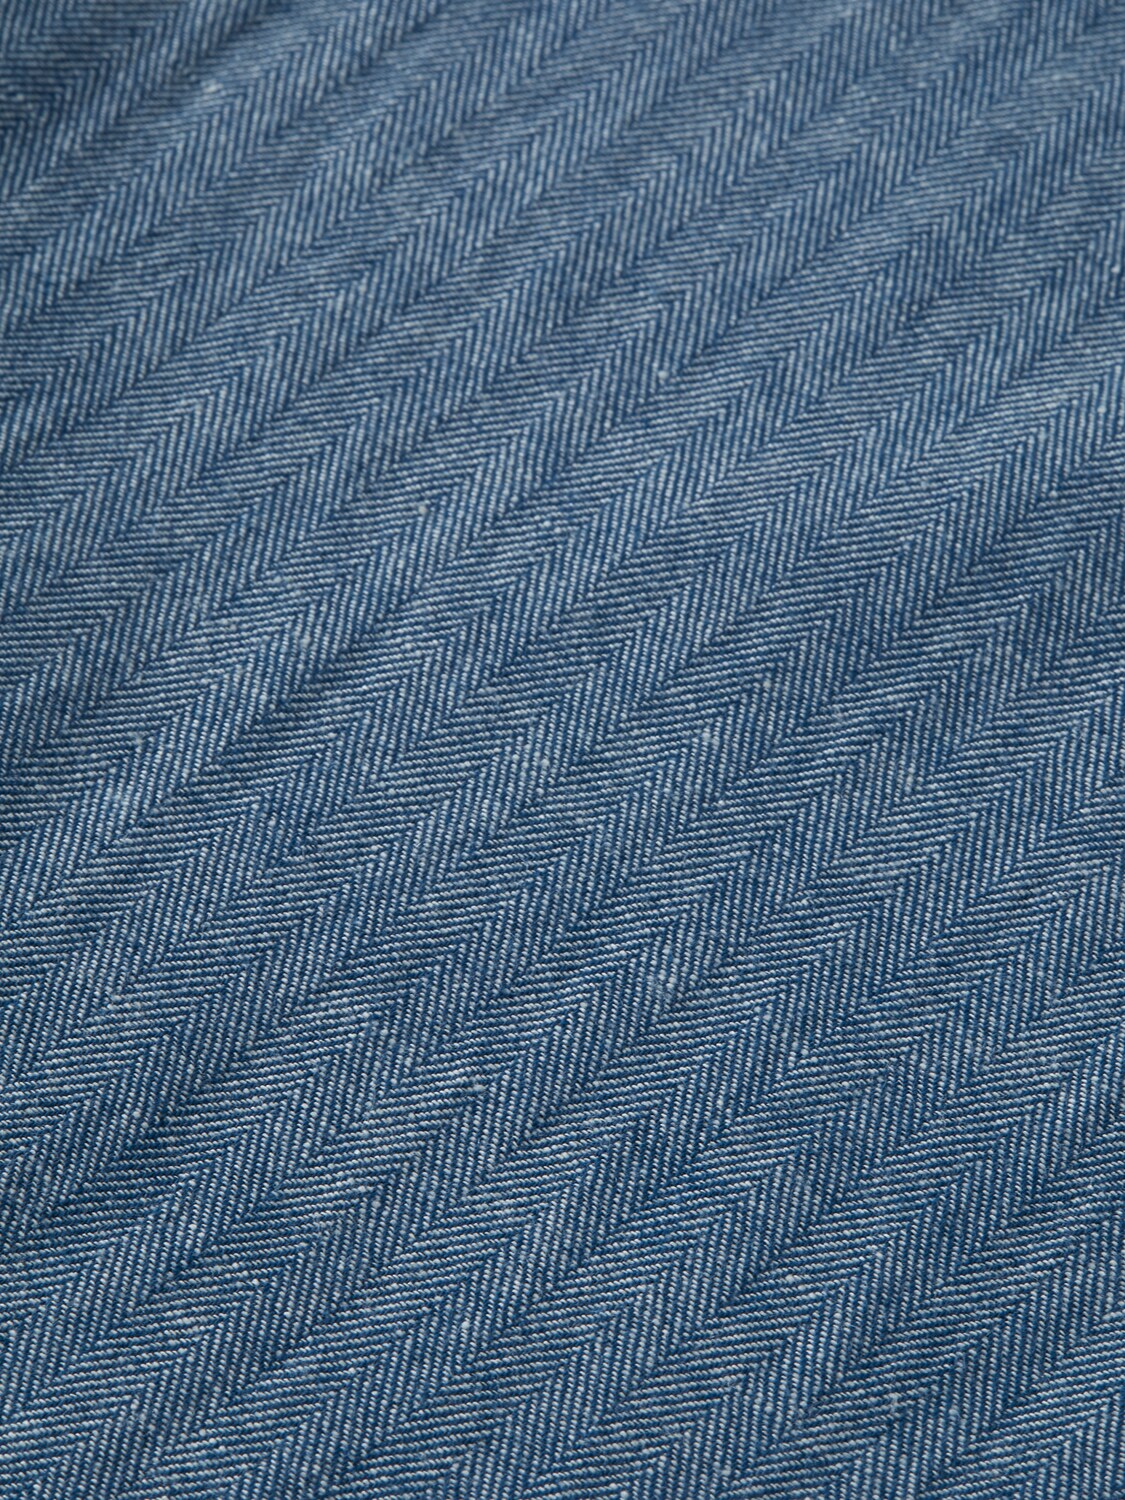 FAVE- Linen-Organic cotton blend beach pant